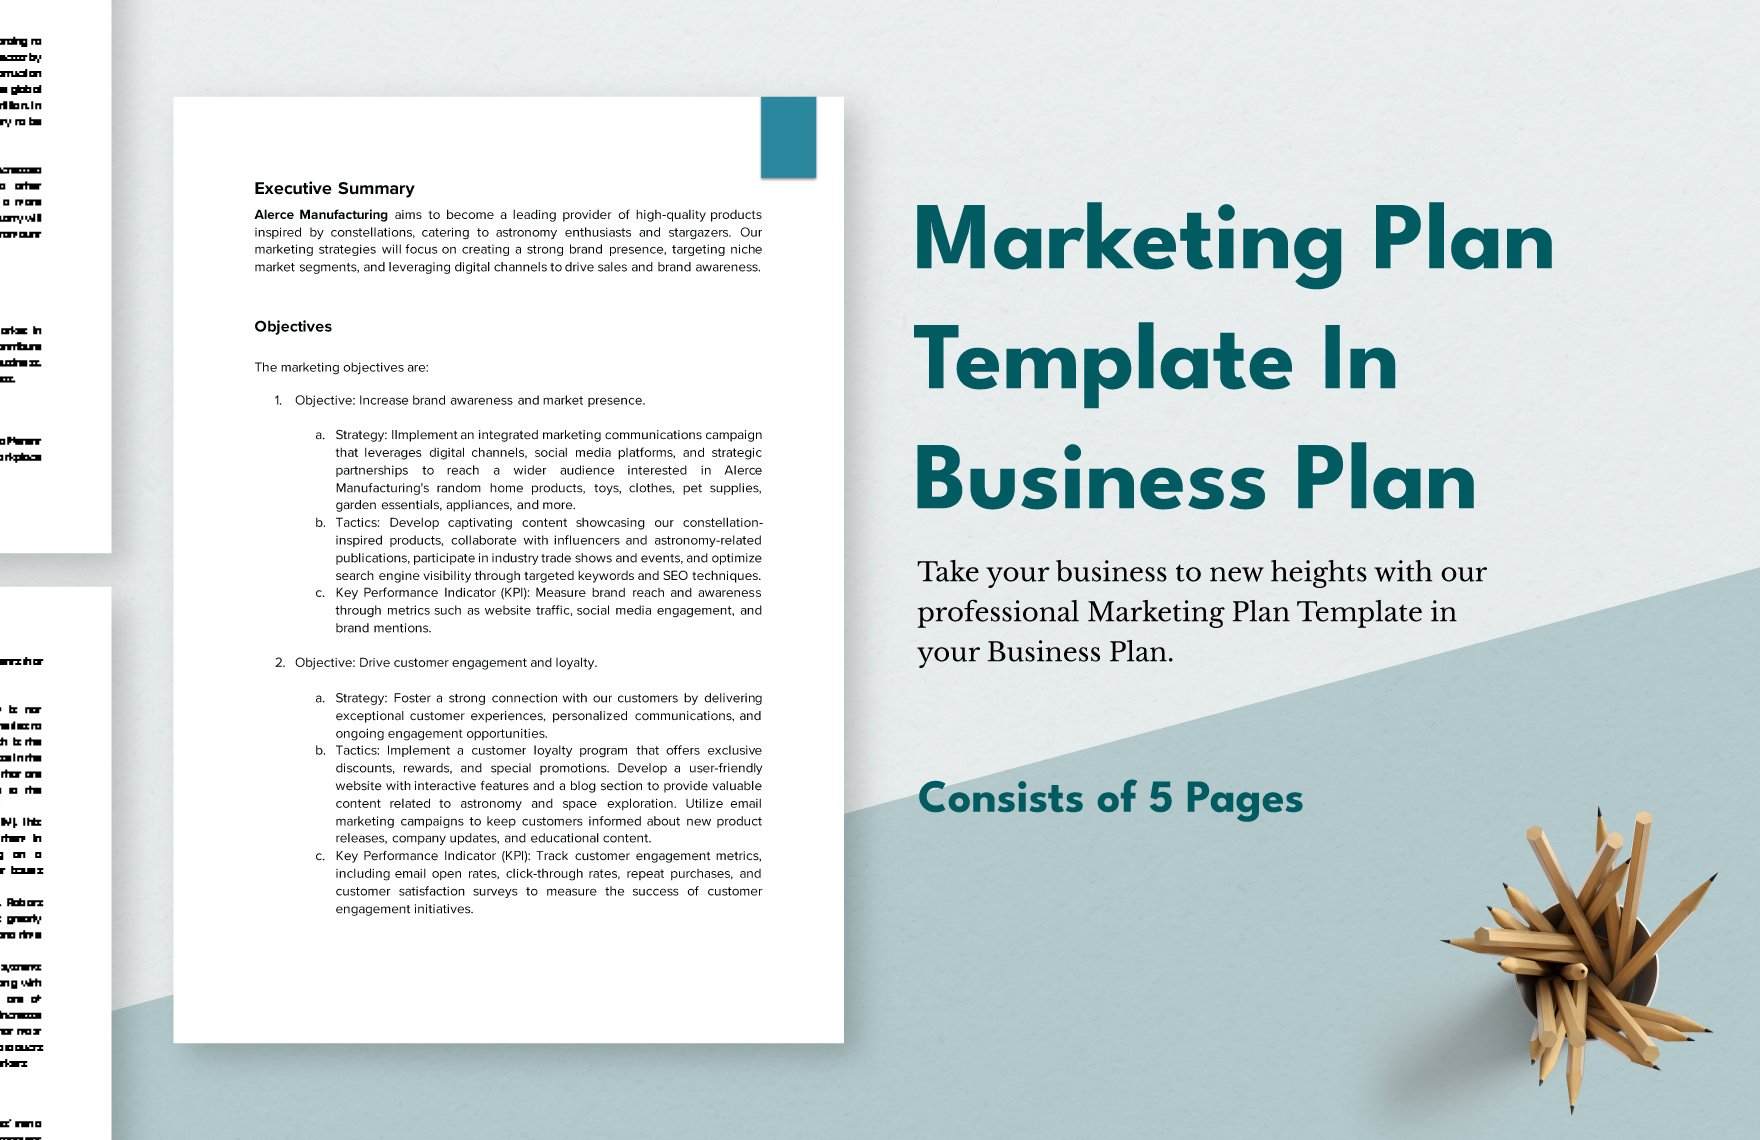 Marketing Plan Template In Business Plan